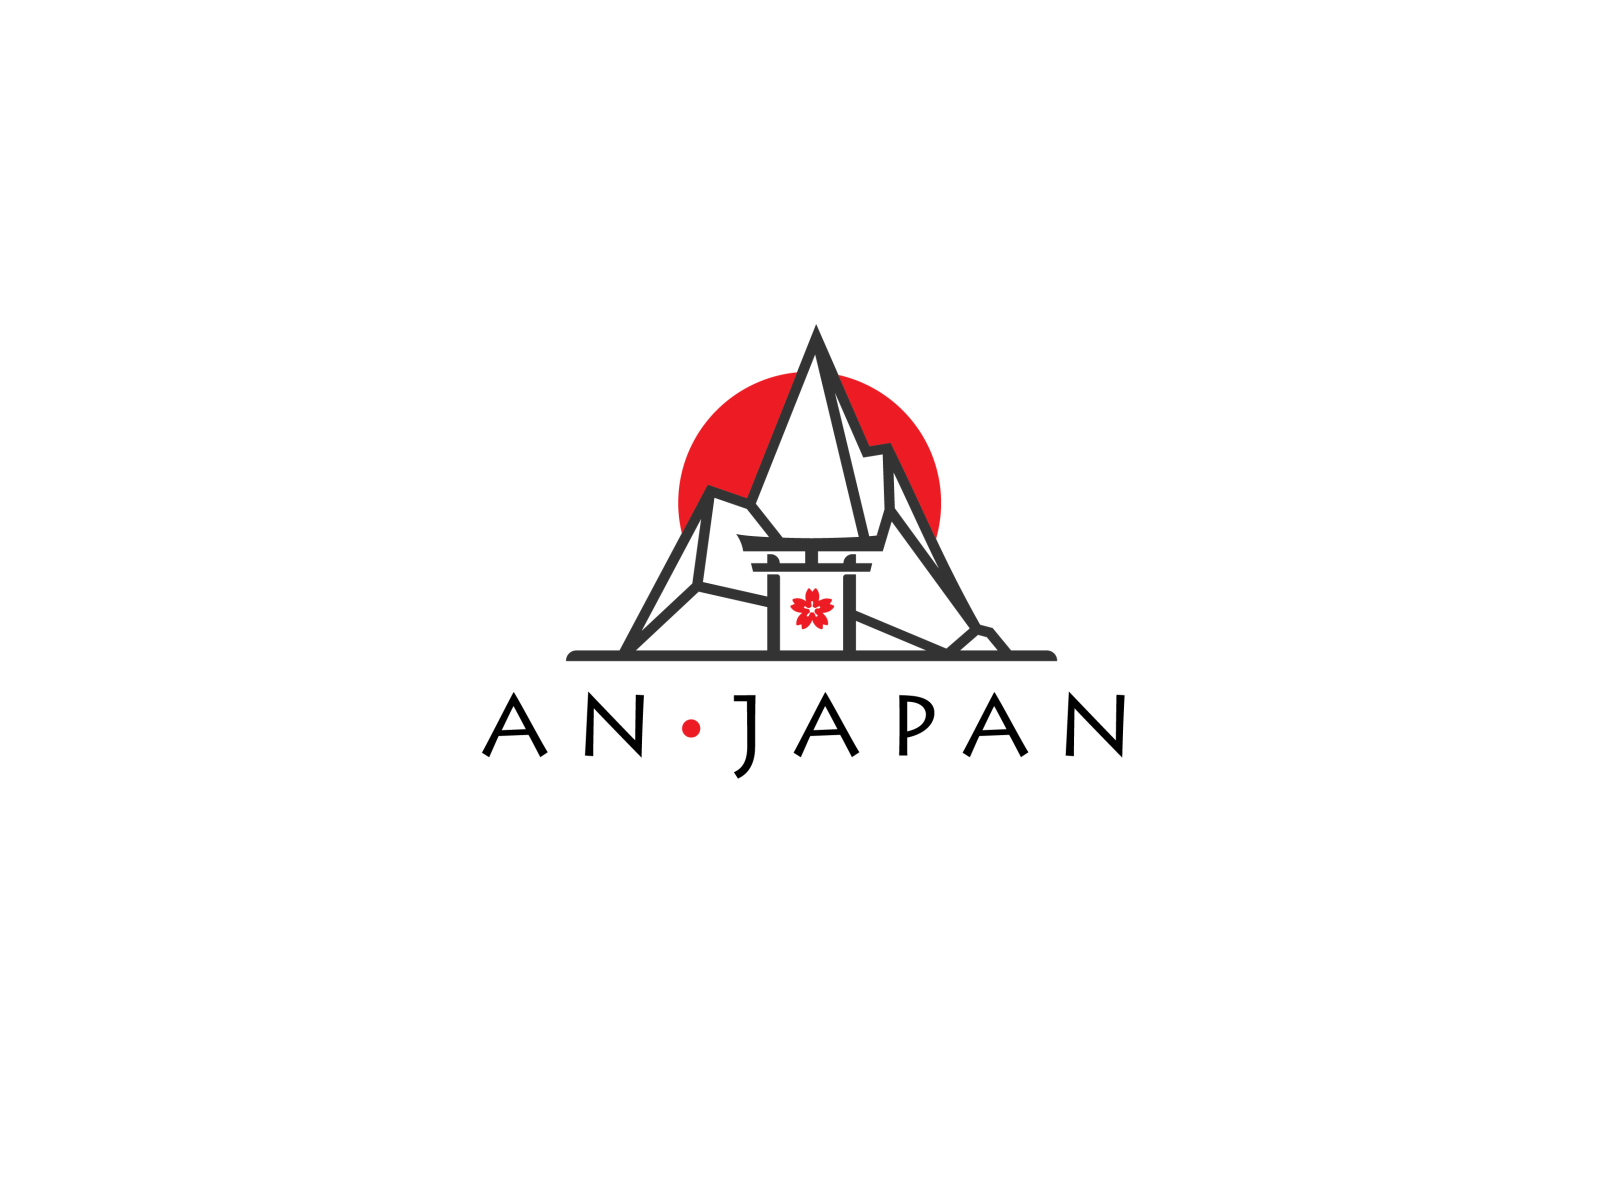 An Japan logo by Brandall Agency by Brandall Design Agency on Dribbble